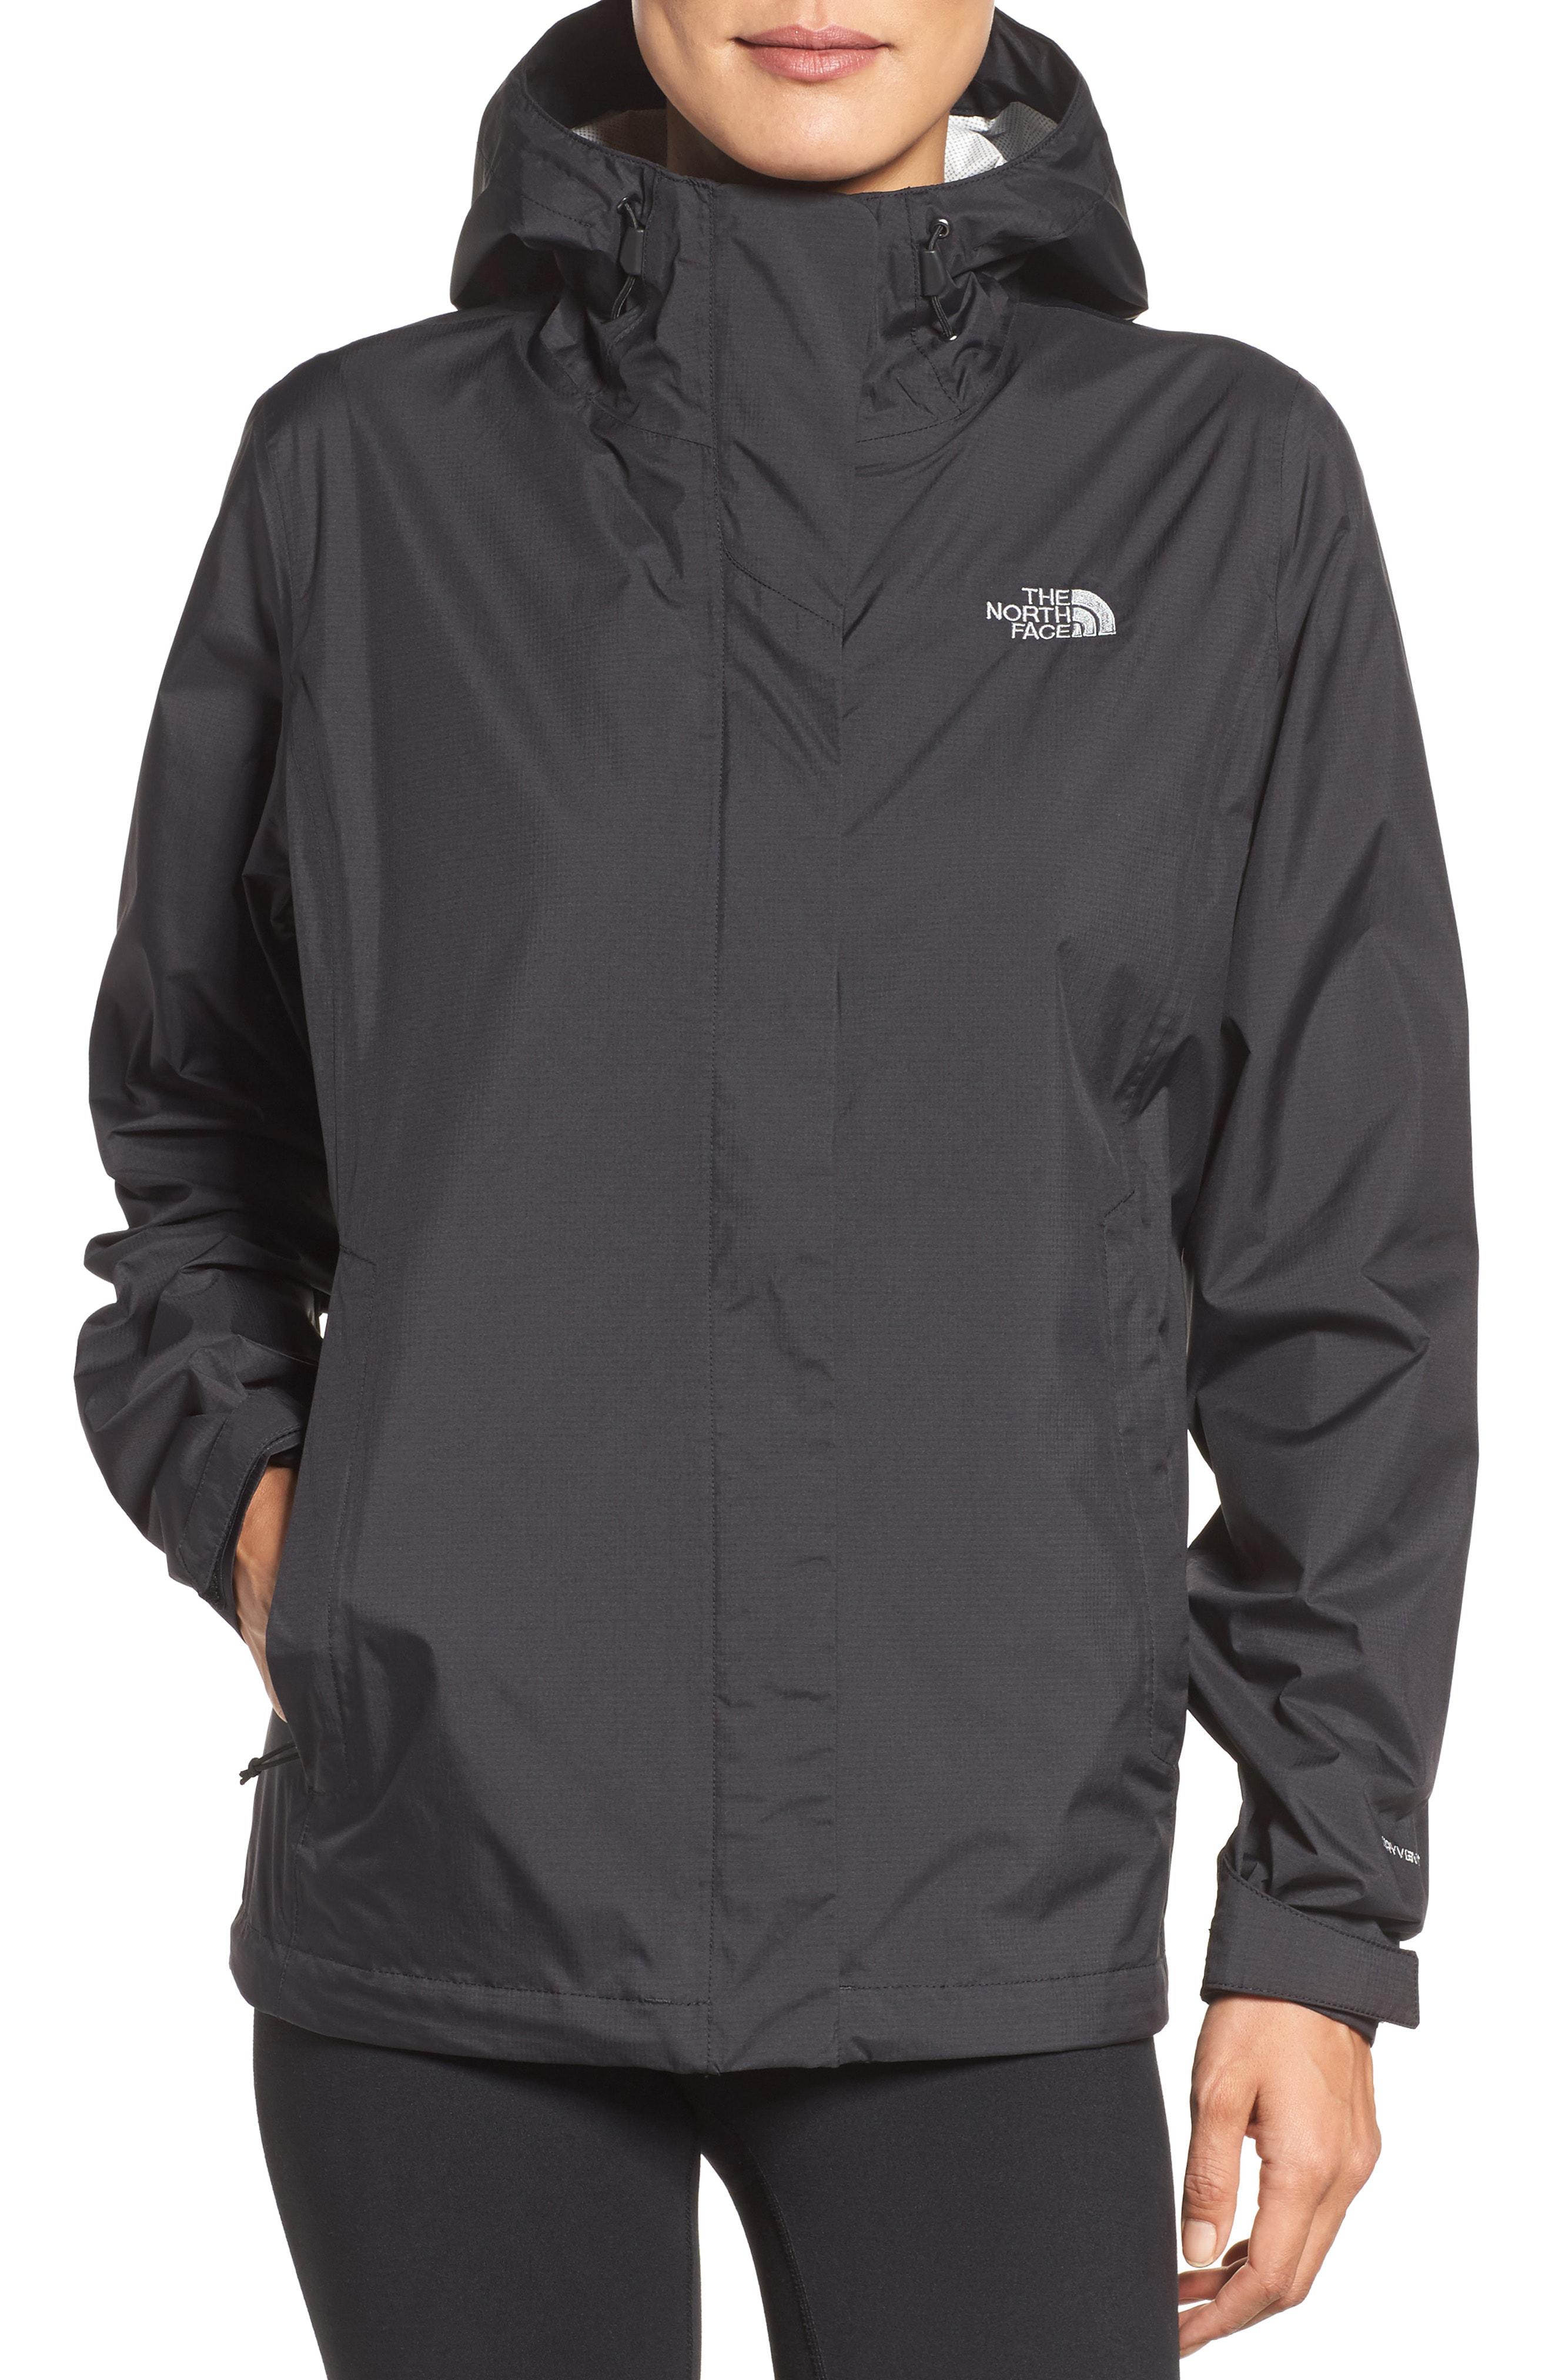 Lyst - The North Face Venture 2 Waterproof Jacket in Black